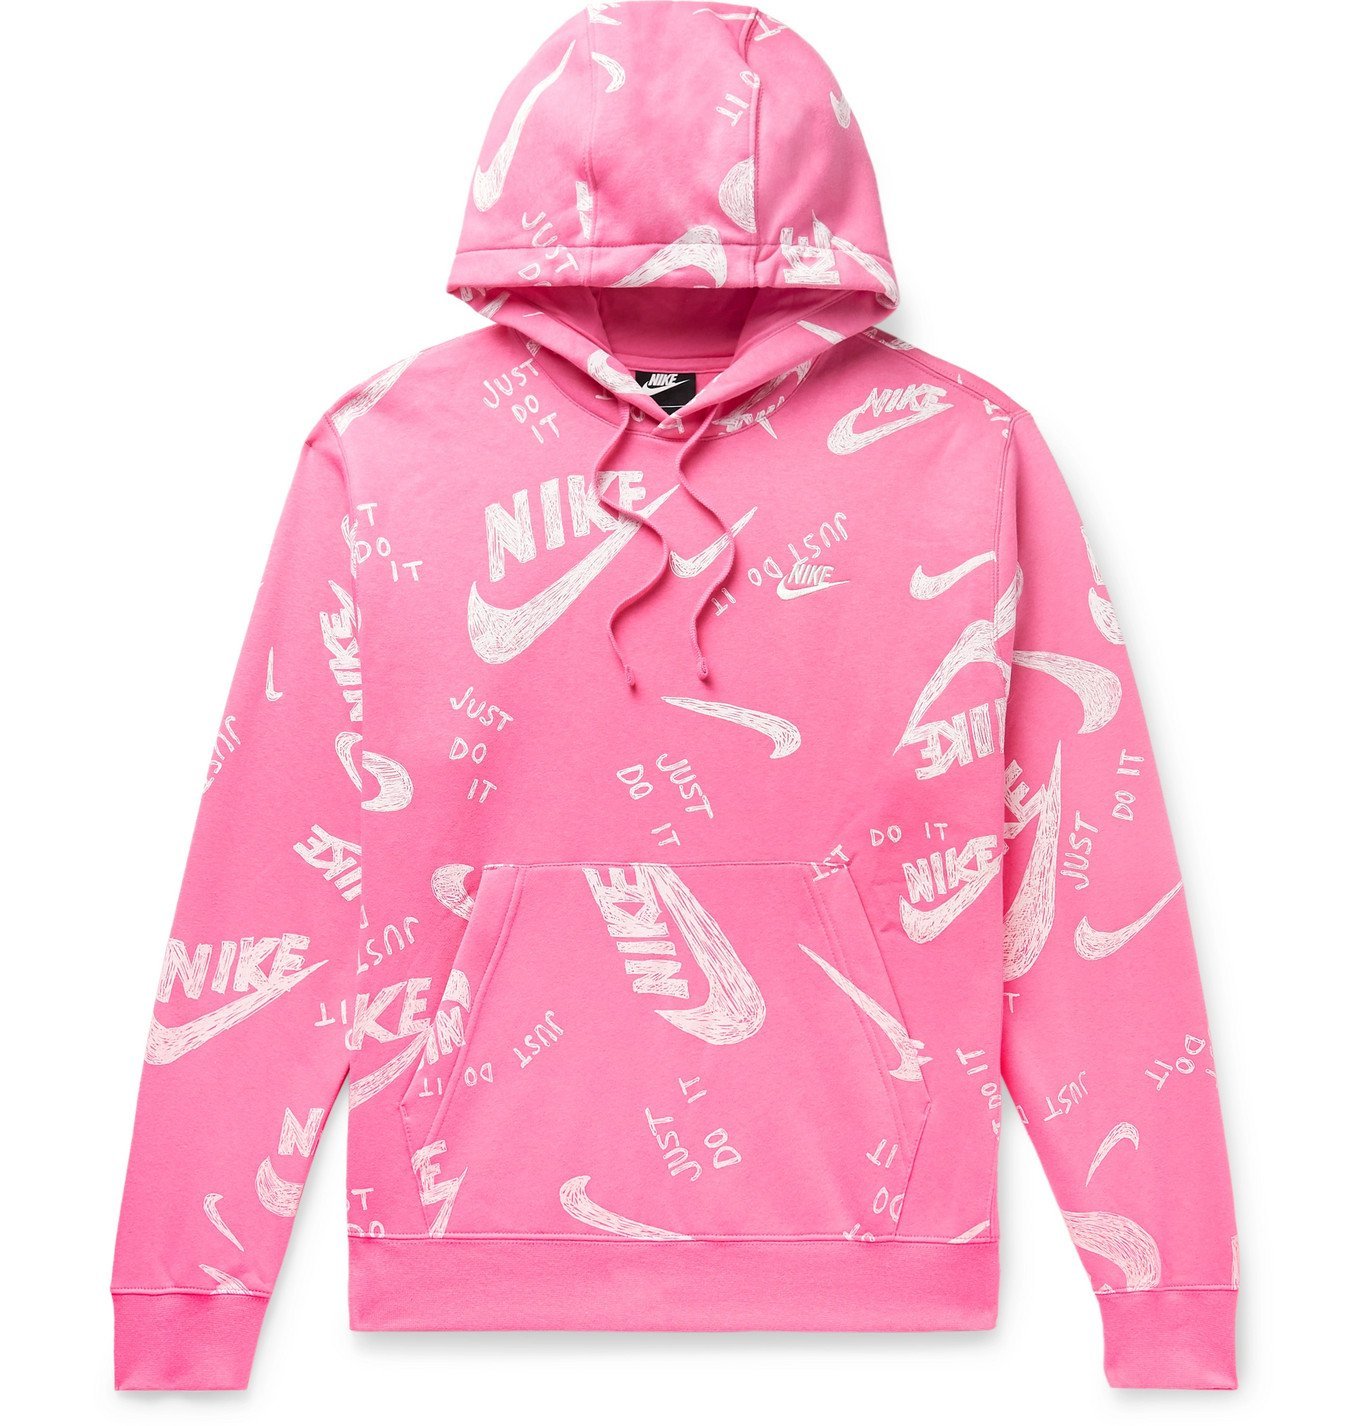 nike just do it hoodie pink